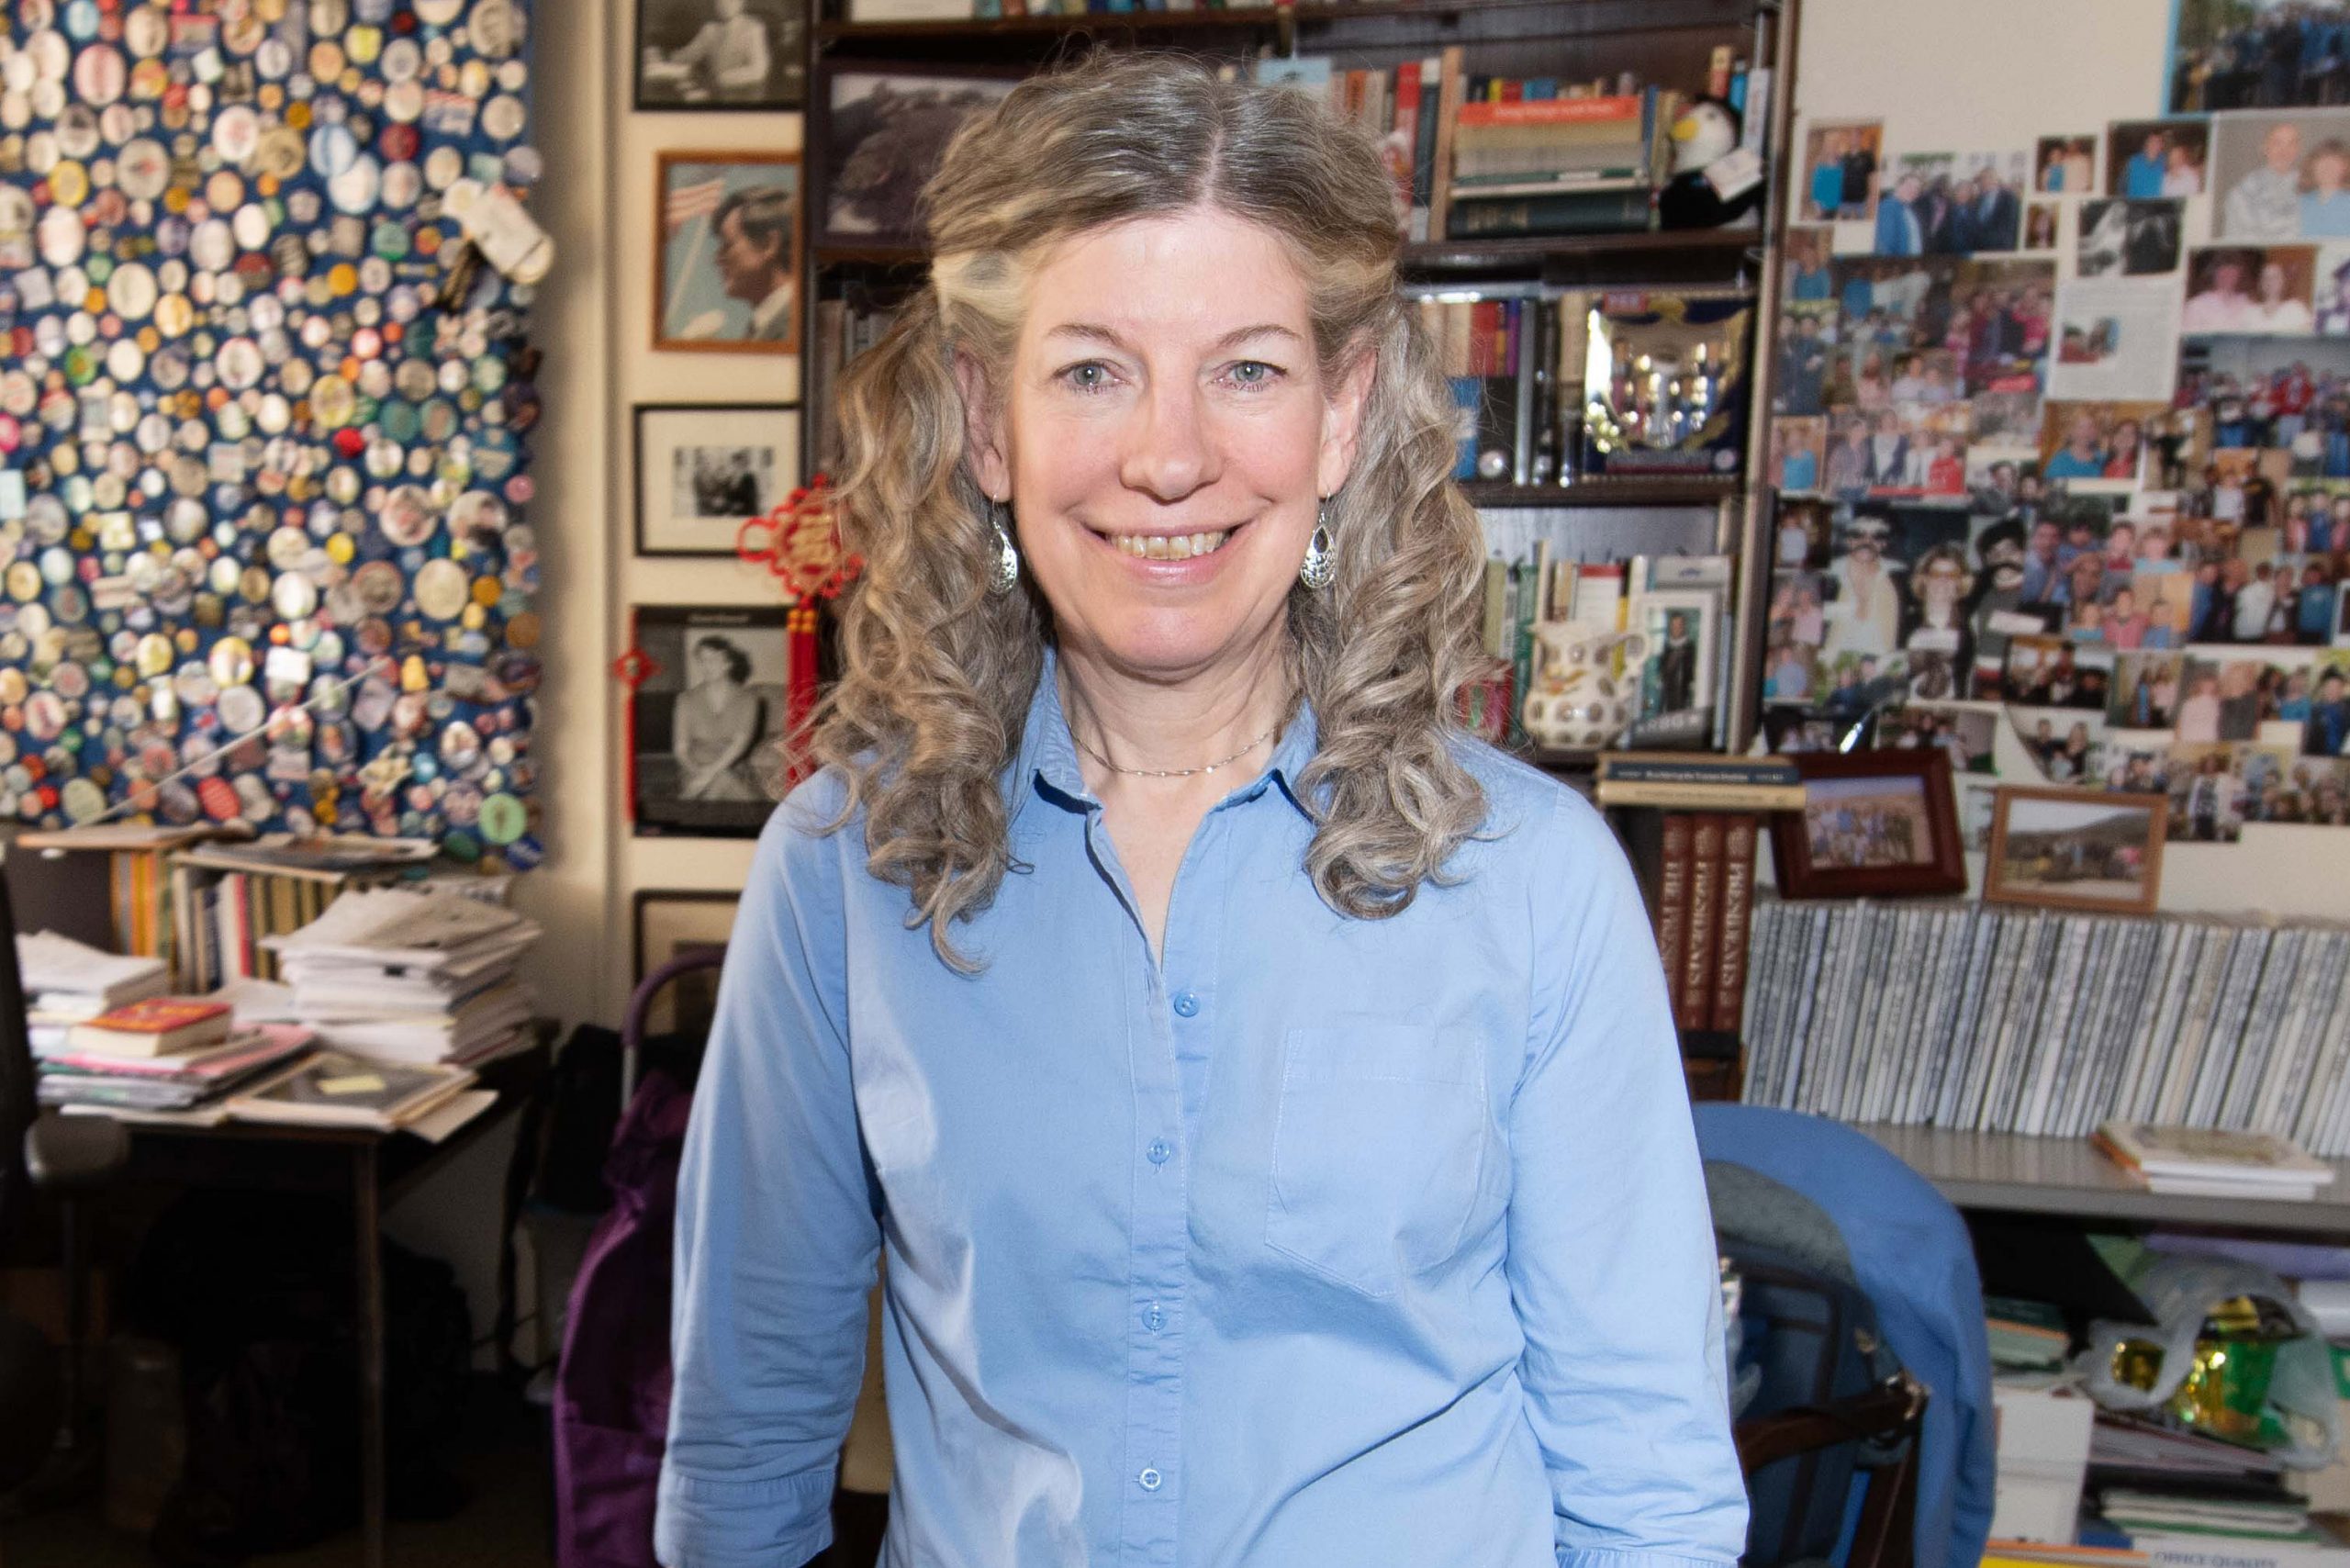 Denise Bostdorff, professor of communication studies